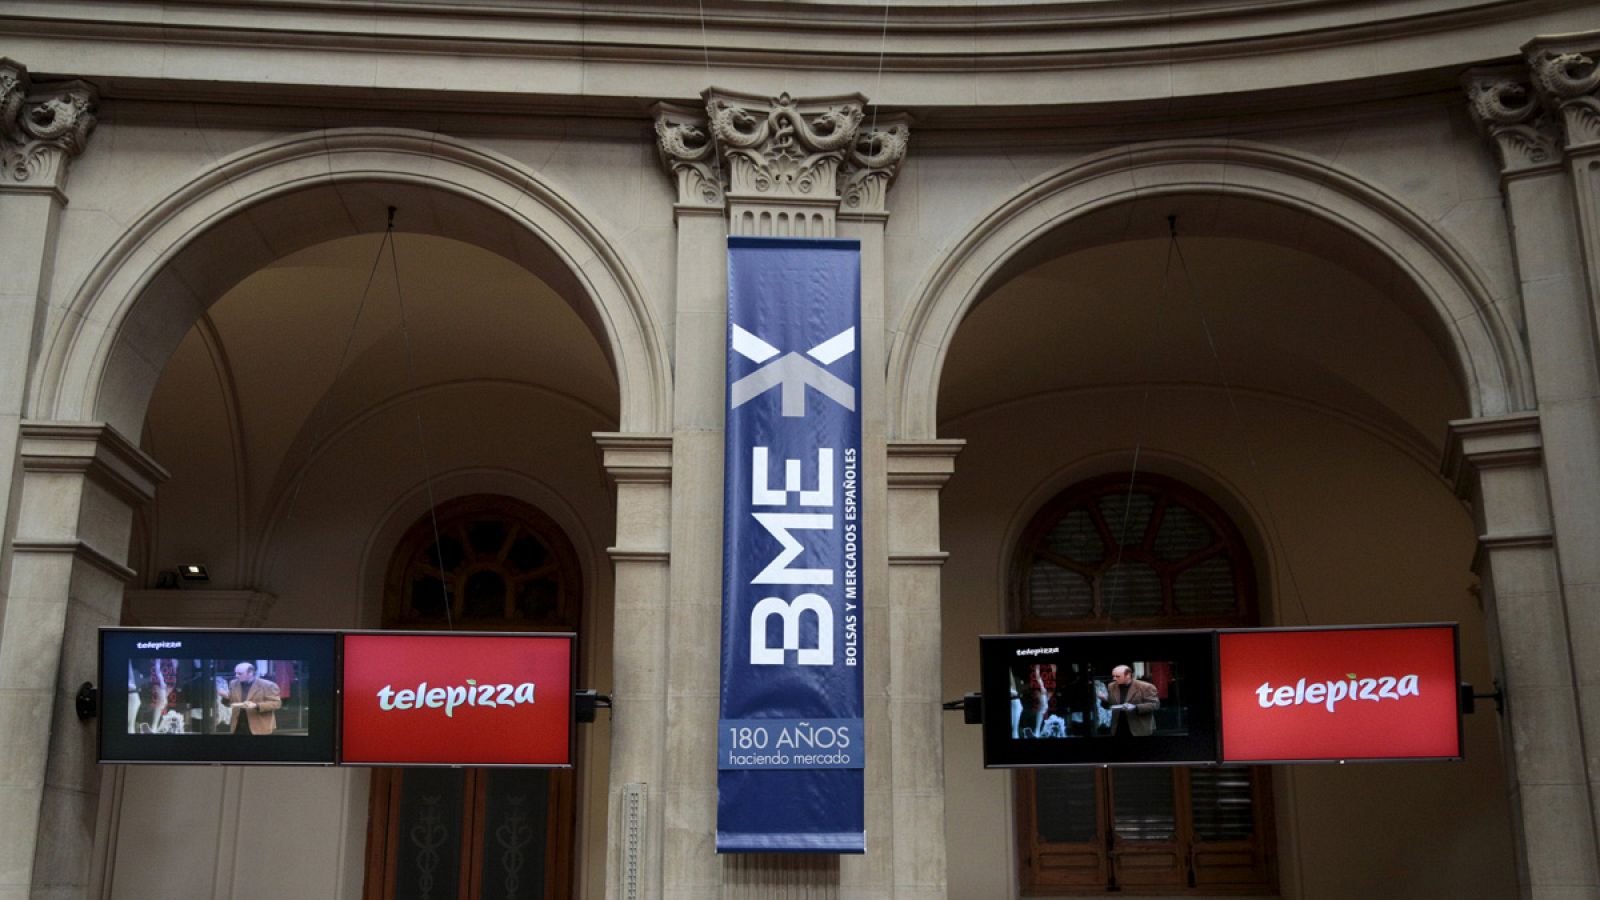 El logo de Telepizza en la Bolsa de Madrid